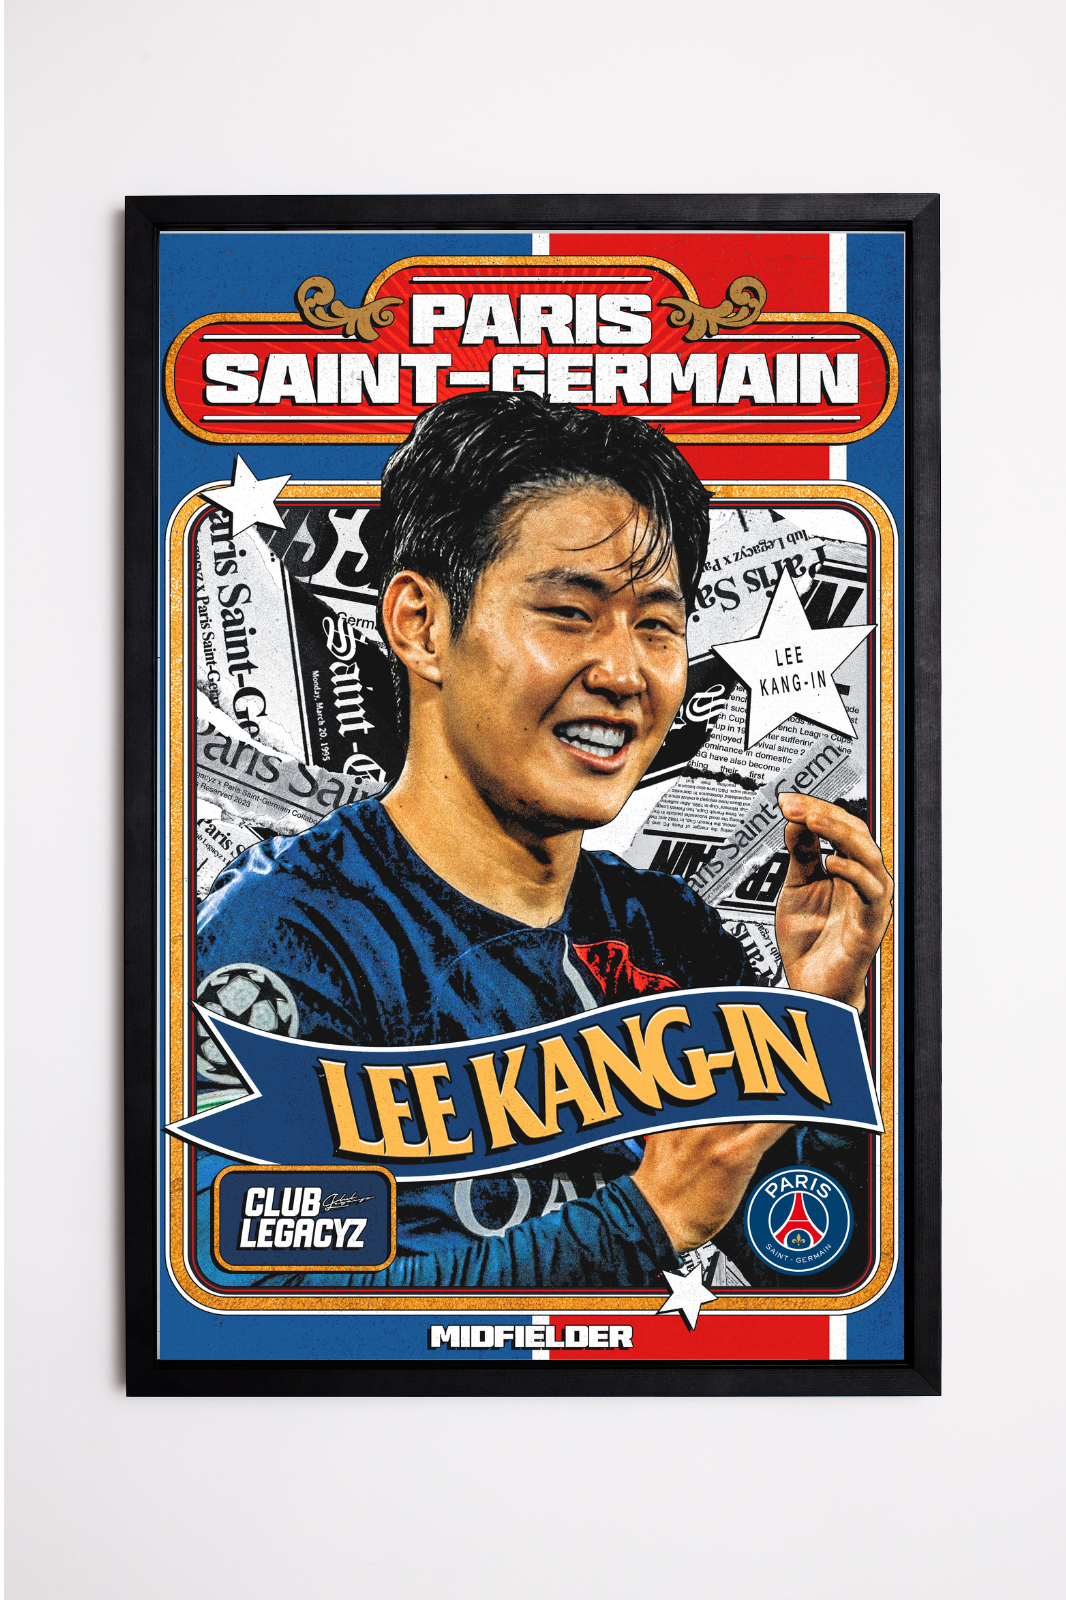 Paris Saint-Germain - Lee Kang-in Retro Poster limited to 100